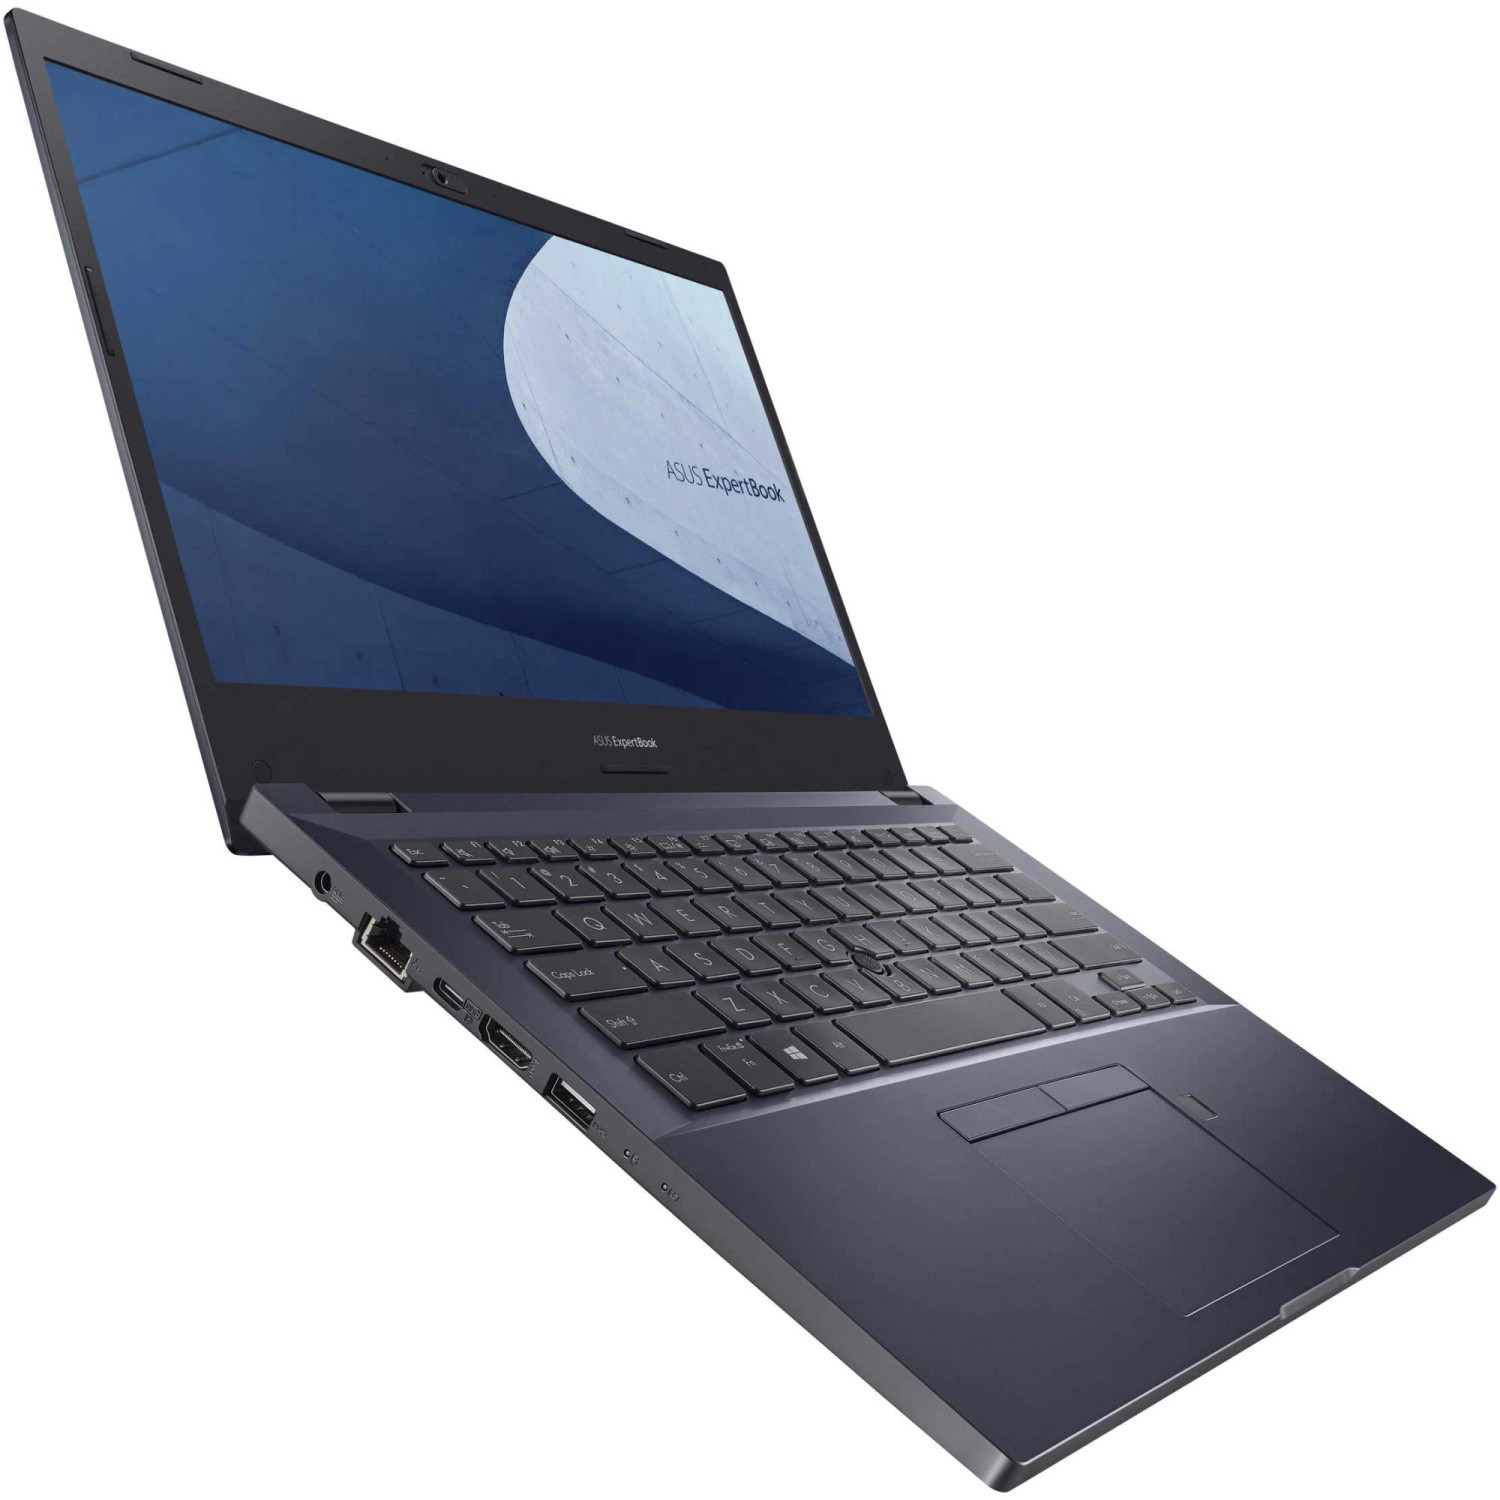 ASUS Лаптоп ExpertBook P2 P2451FA-EK0111R, 14" FHD, Intel i5-10210U(1.6Ghz Up to 4.2Ghz, 6MB), 8GB DDR4 RAM, 256GB PCIE SSD, Win 10 Pro, Star Black